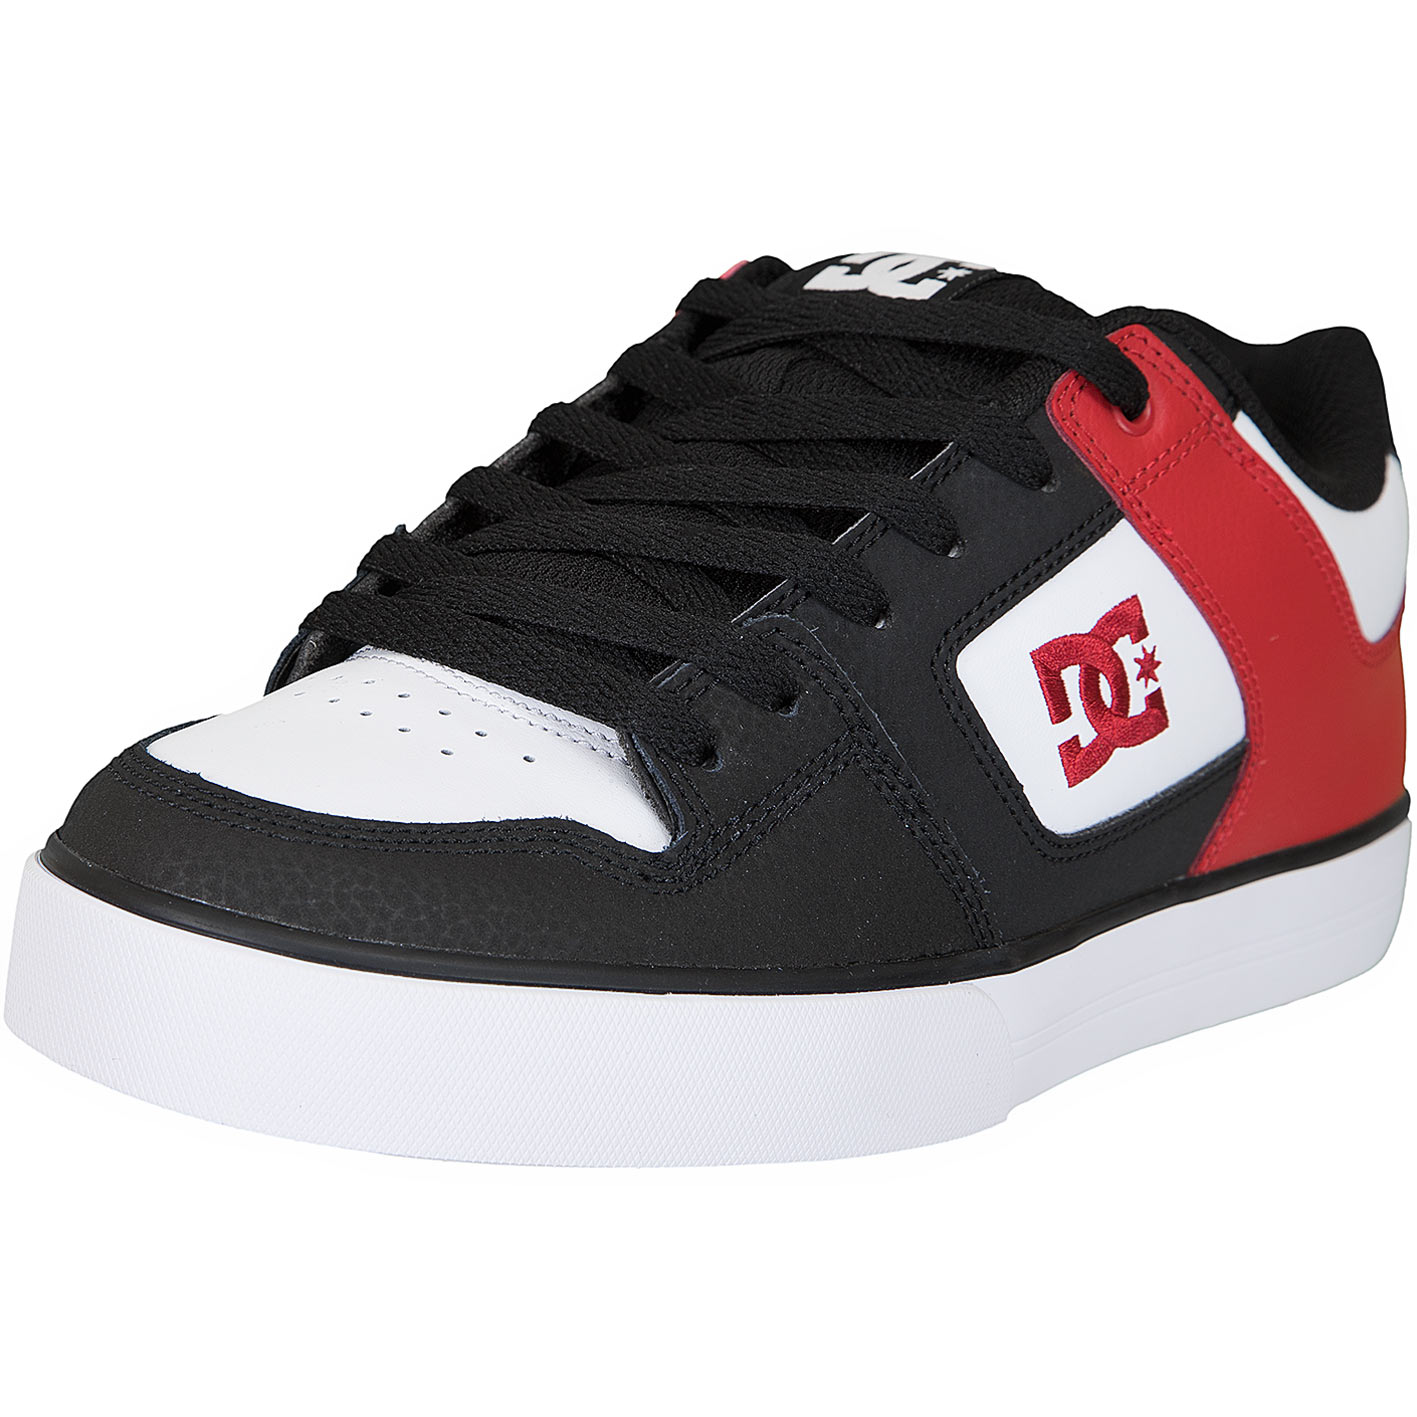 ☆ DC Shoes Sneaker Pure schwarz/rot/weiß - hier bestellen!